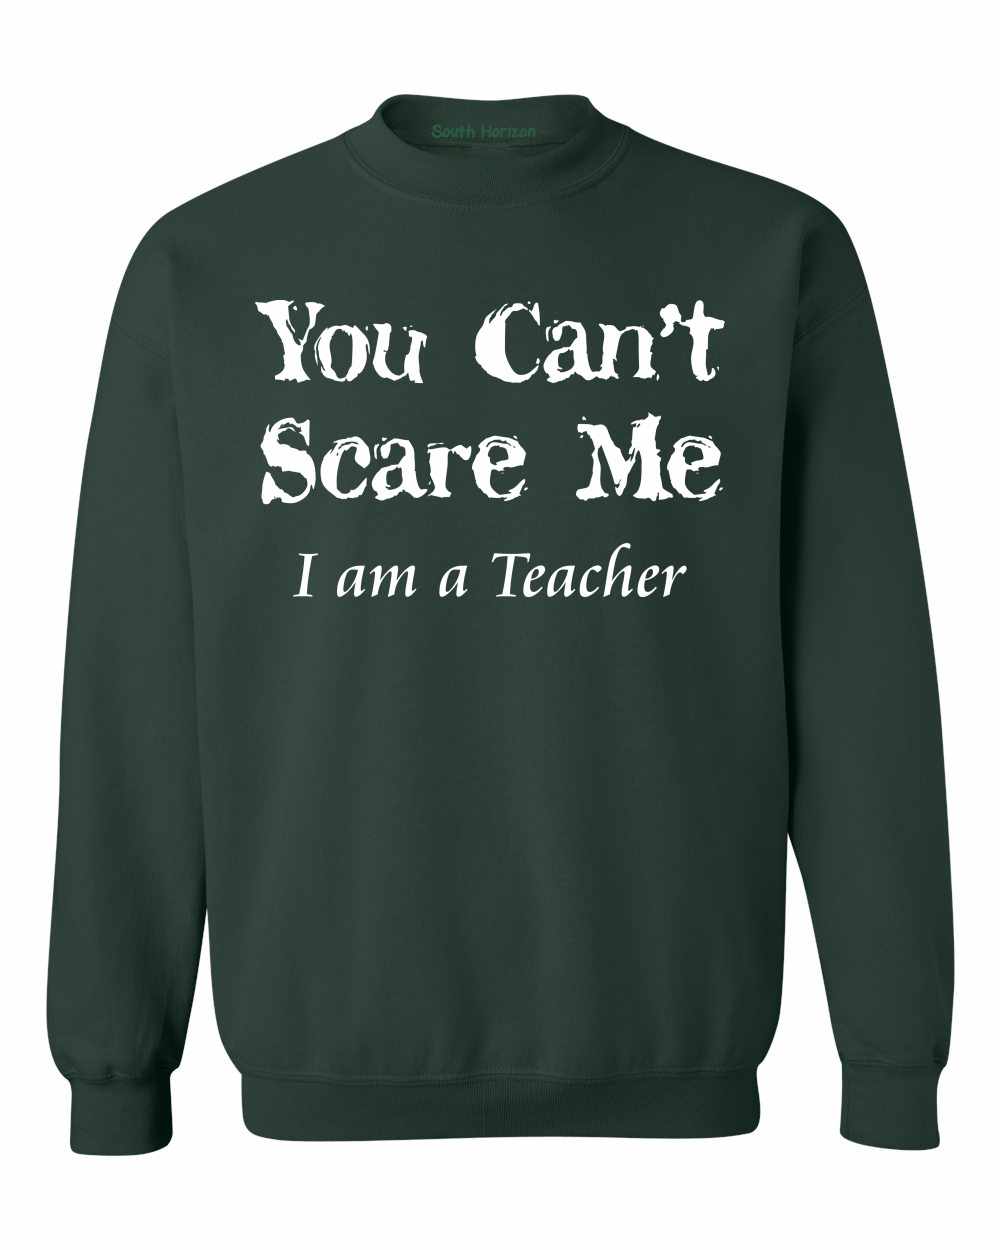 You Can't Scare Me I am a Teacher on SweatShirt (#848-11)